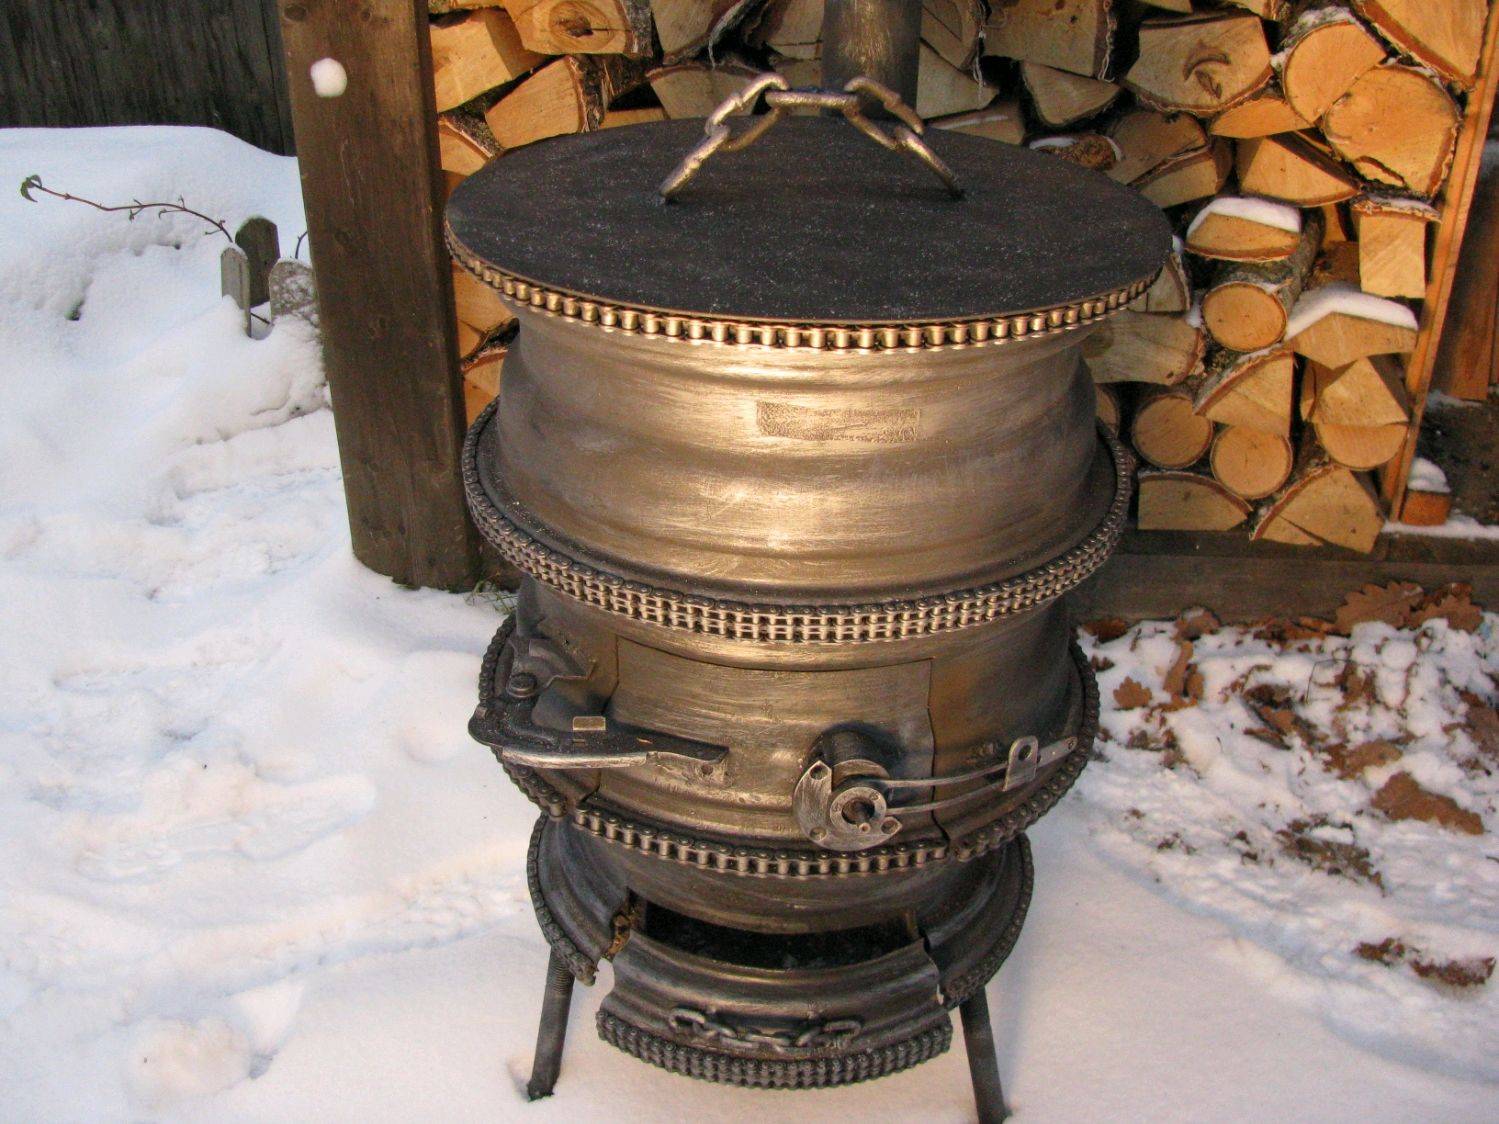 Печка из камазовских дисков своими руками - moy-instrument.ru - обзор инструмента и техники